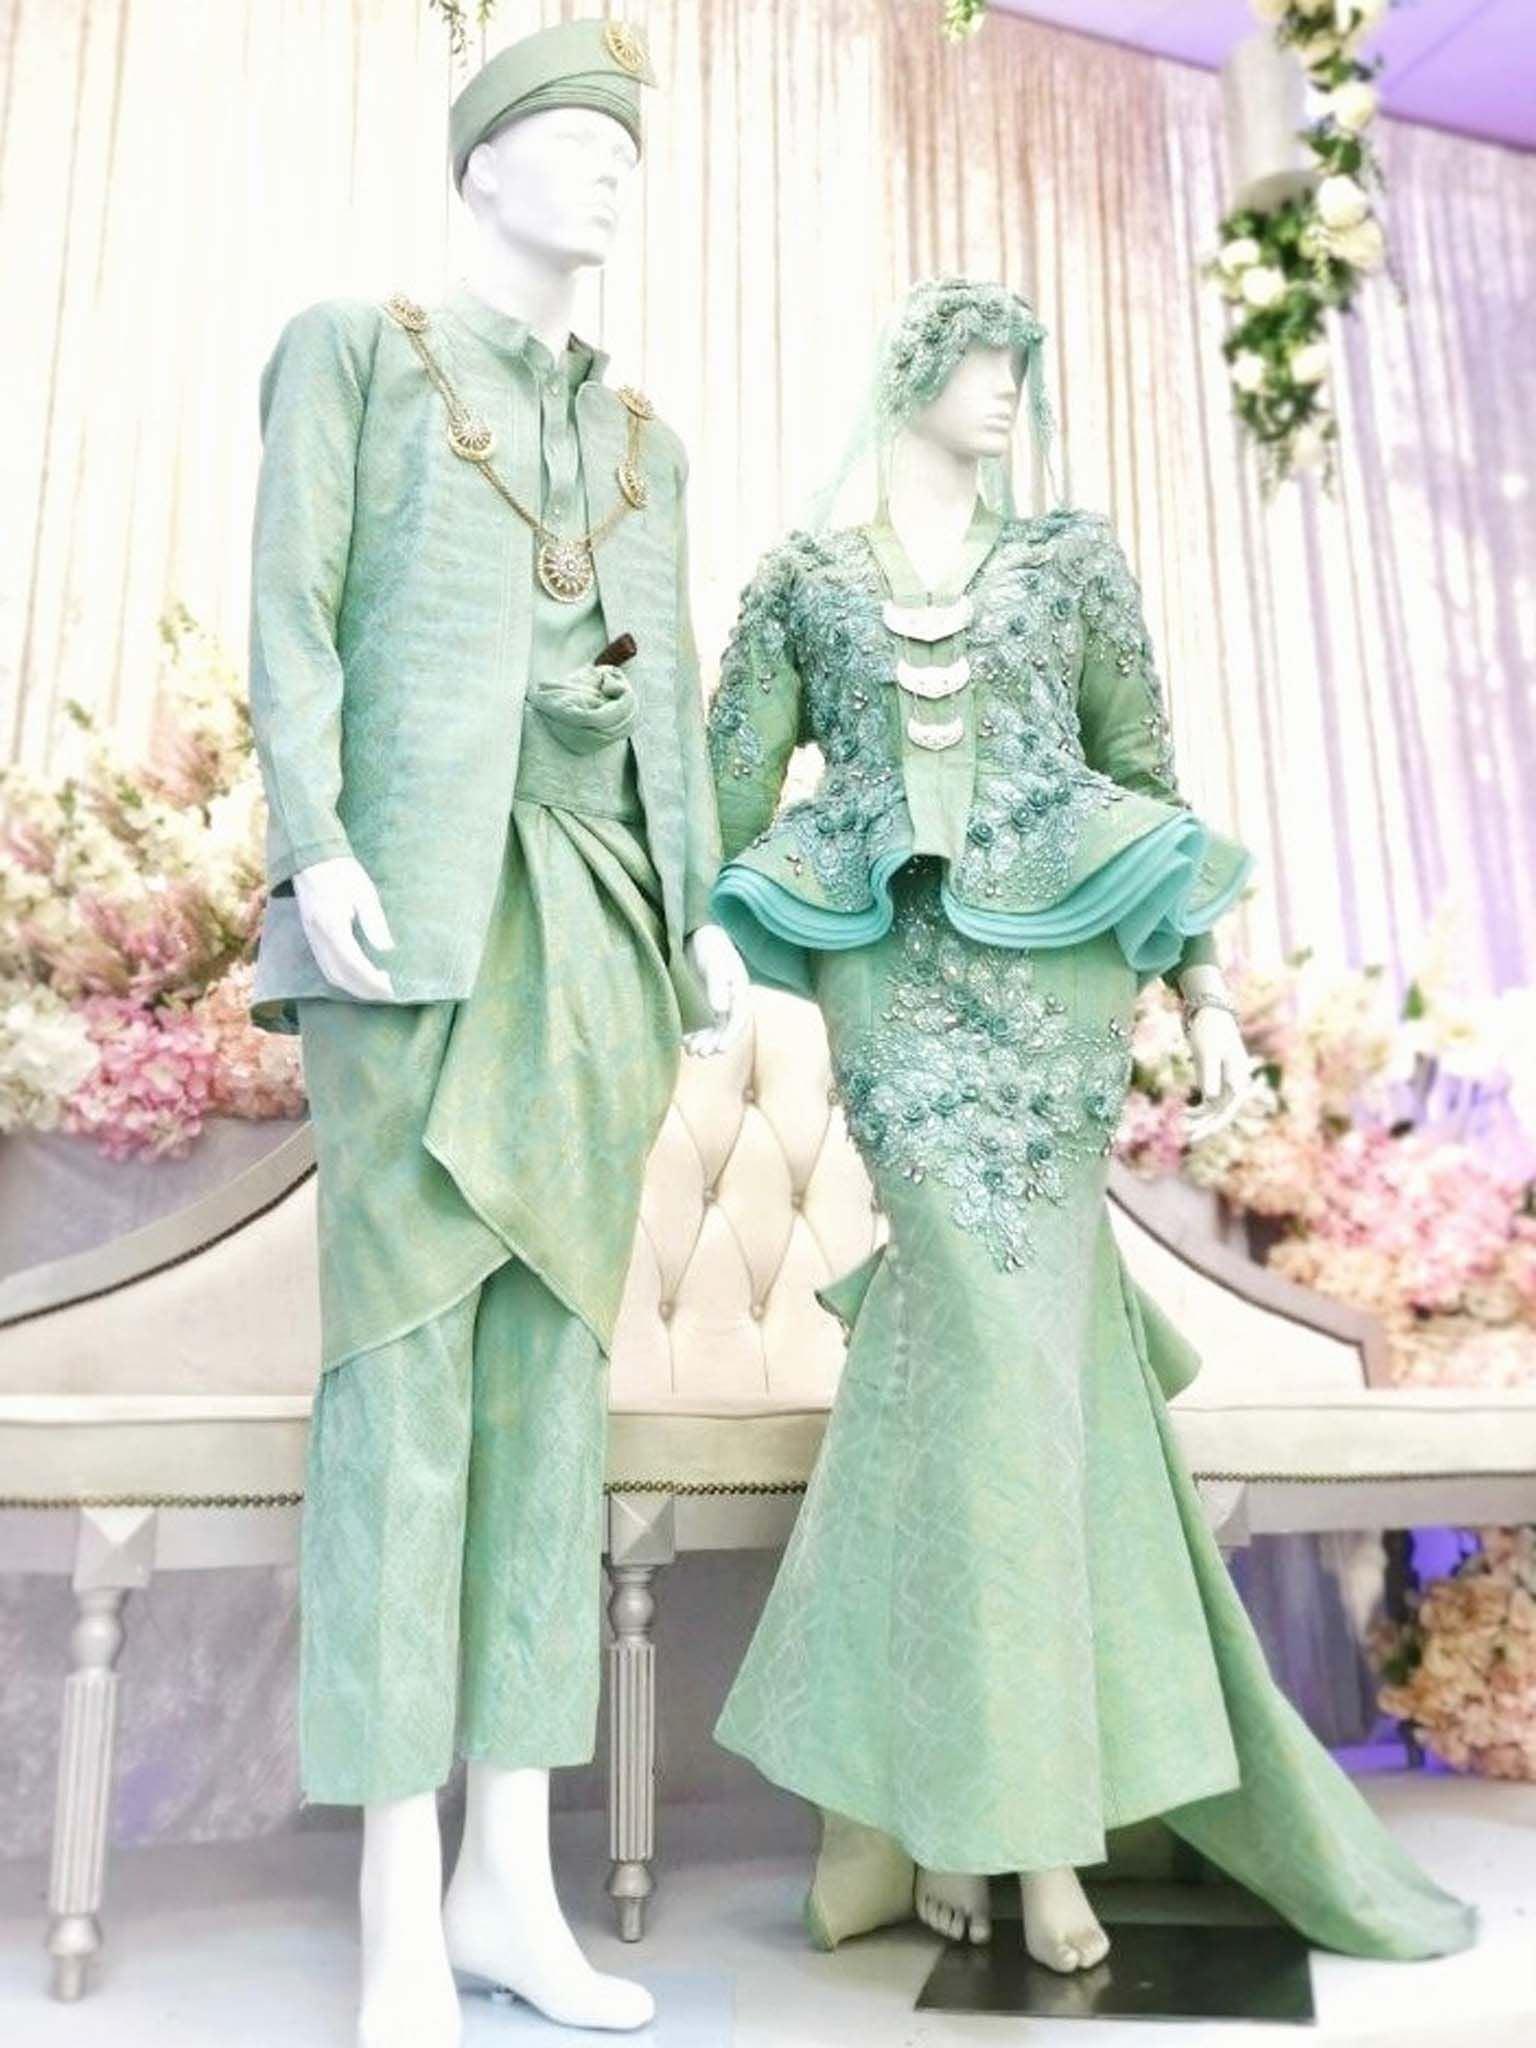 MEDUSA - Radiant Two-Piece Peplum Songket Wedding Dress in Mint Green and Light Gold from PP Signature Bridal Boutique-Tempah Baju Pengantin online 